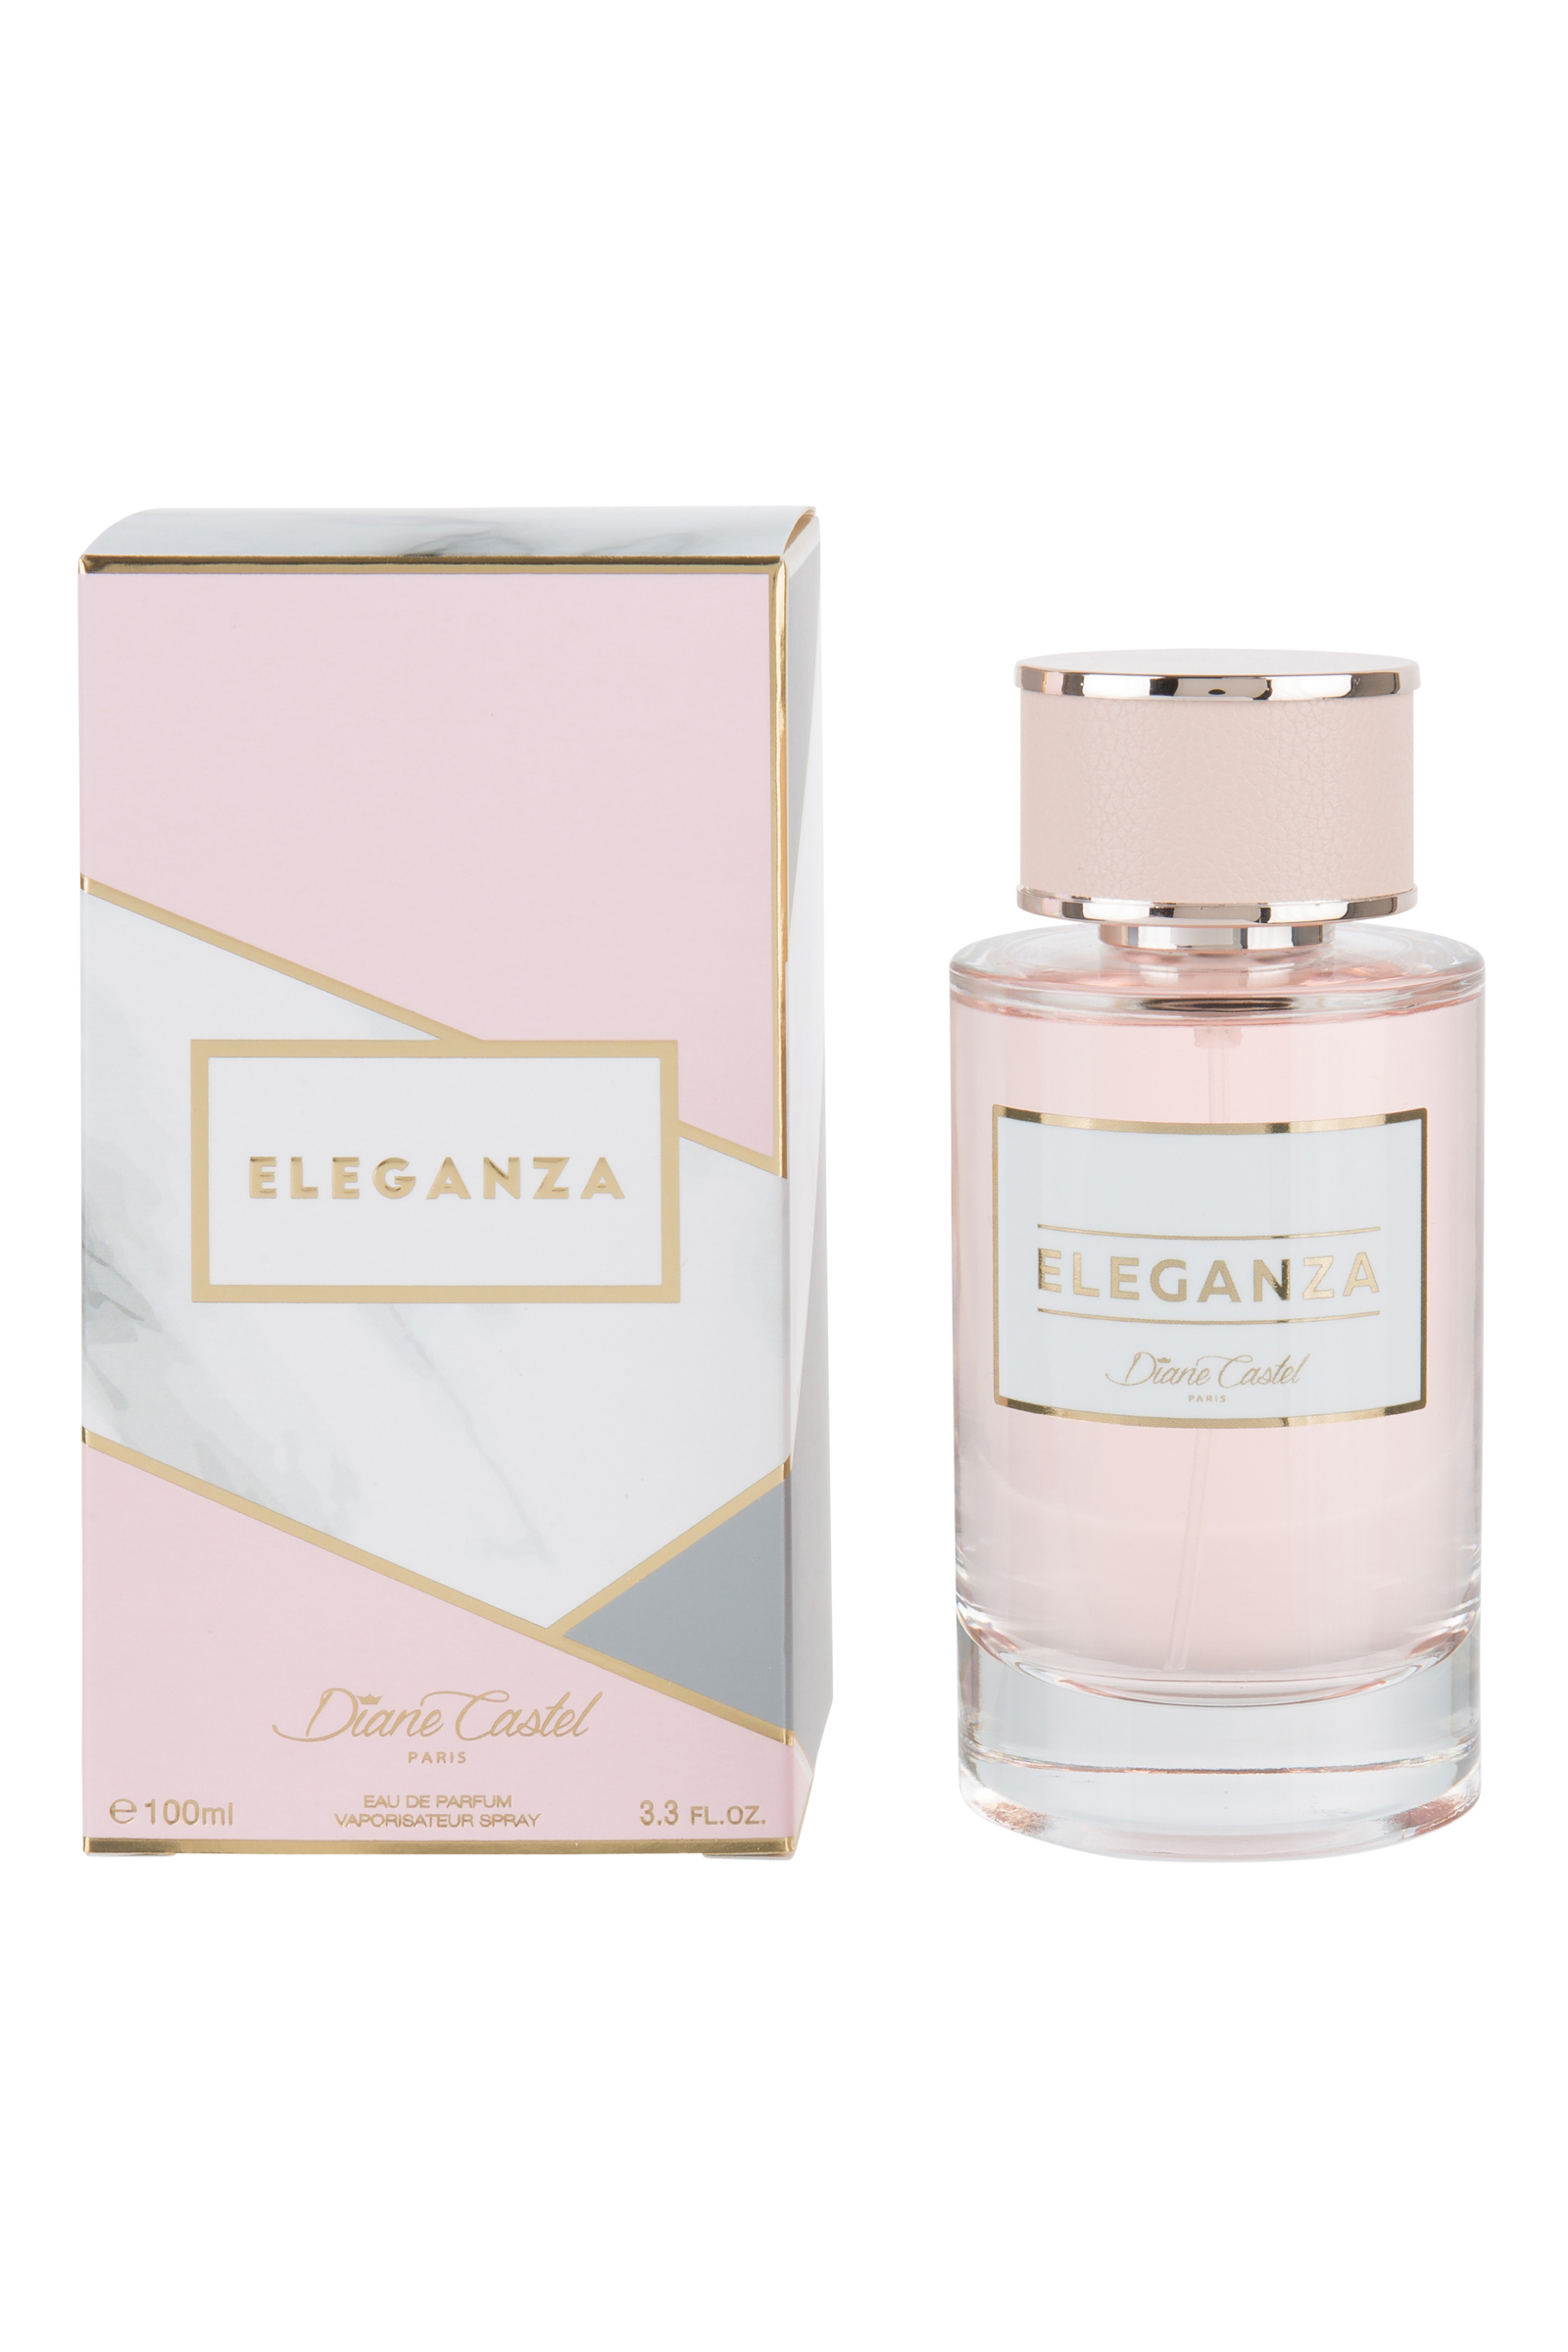 Diane Castel Eleganza - Paris Perfumes Inc - USA Fragrance Distributors ...